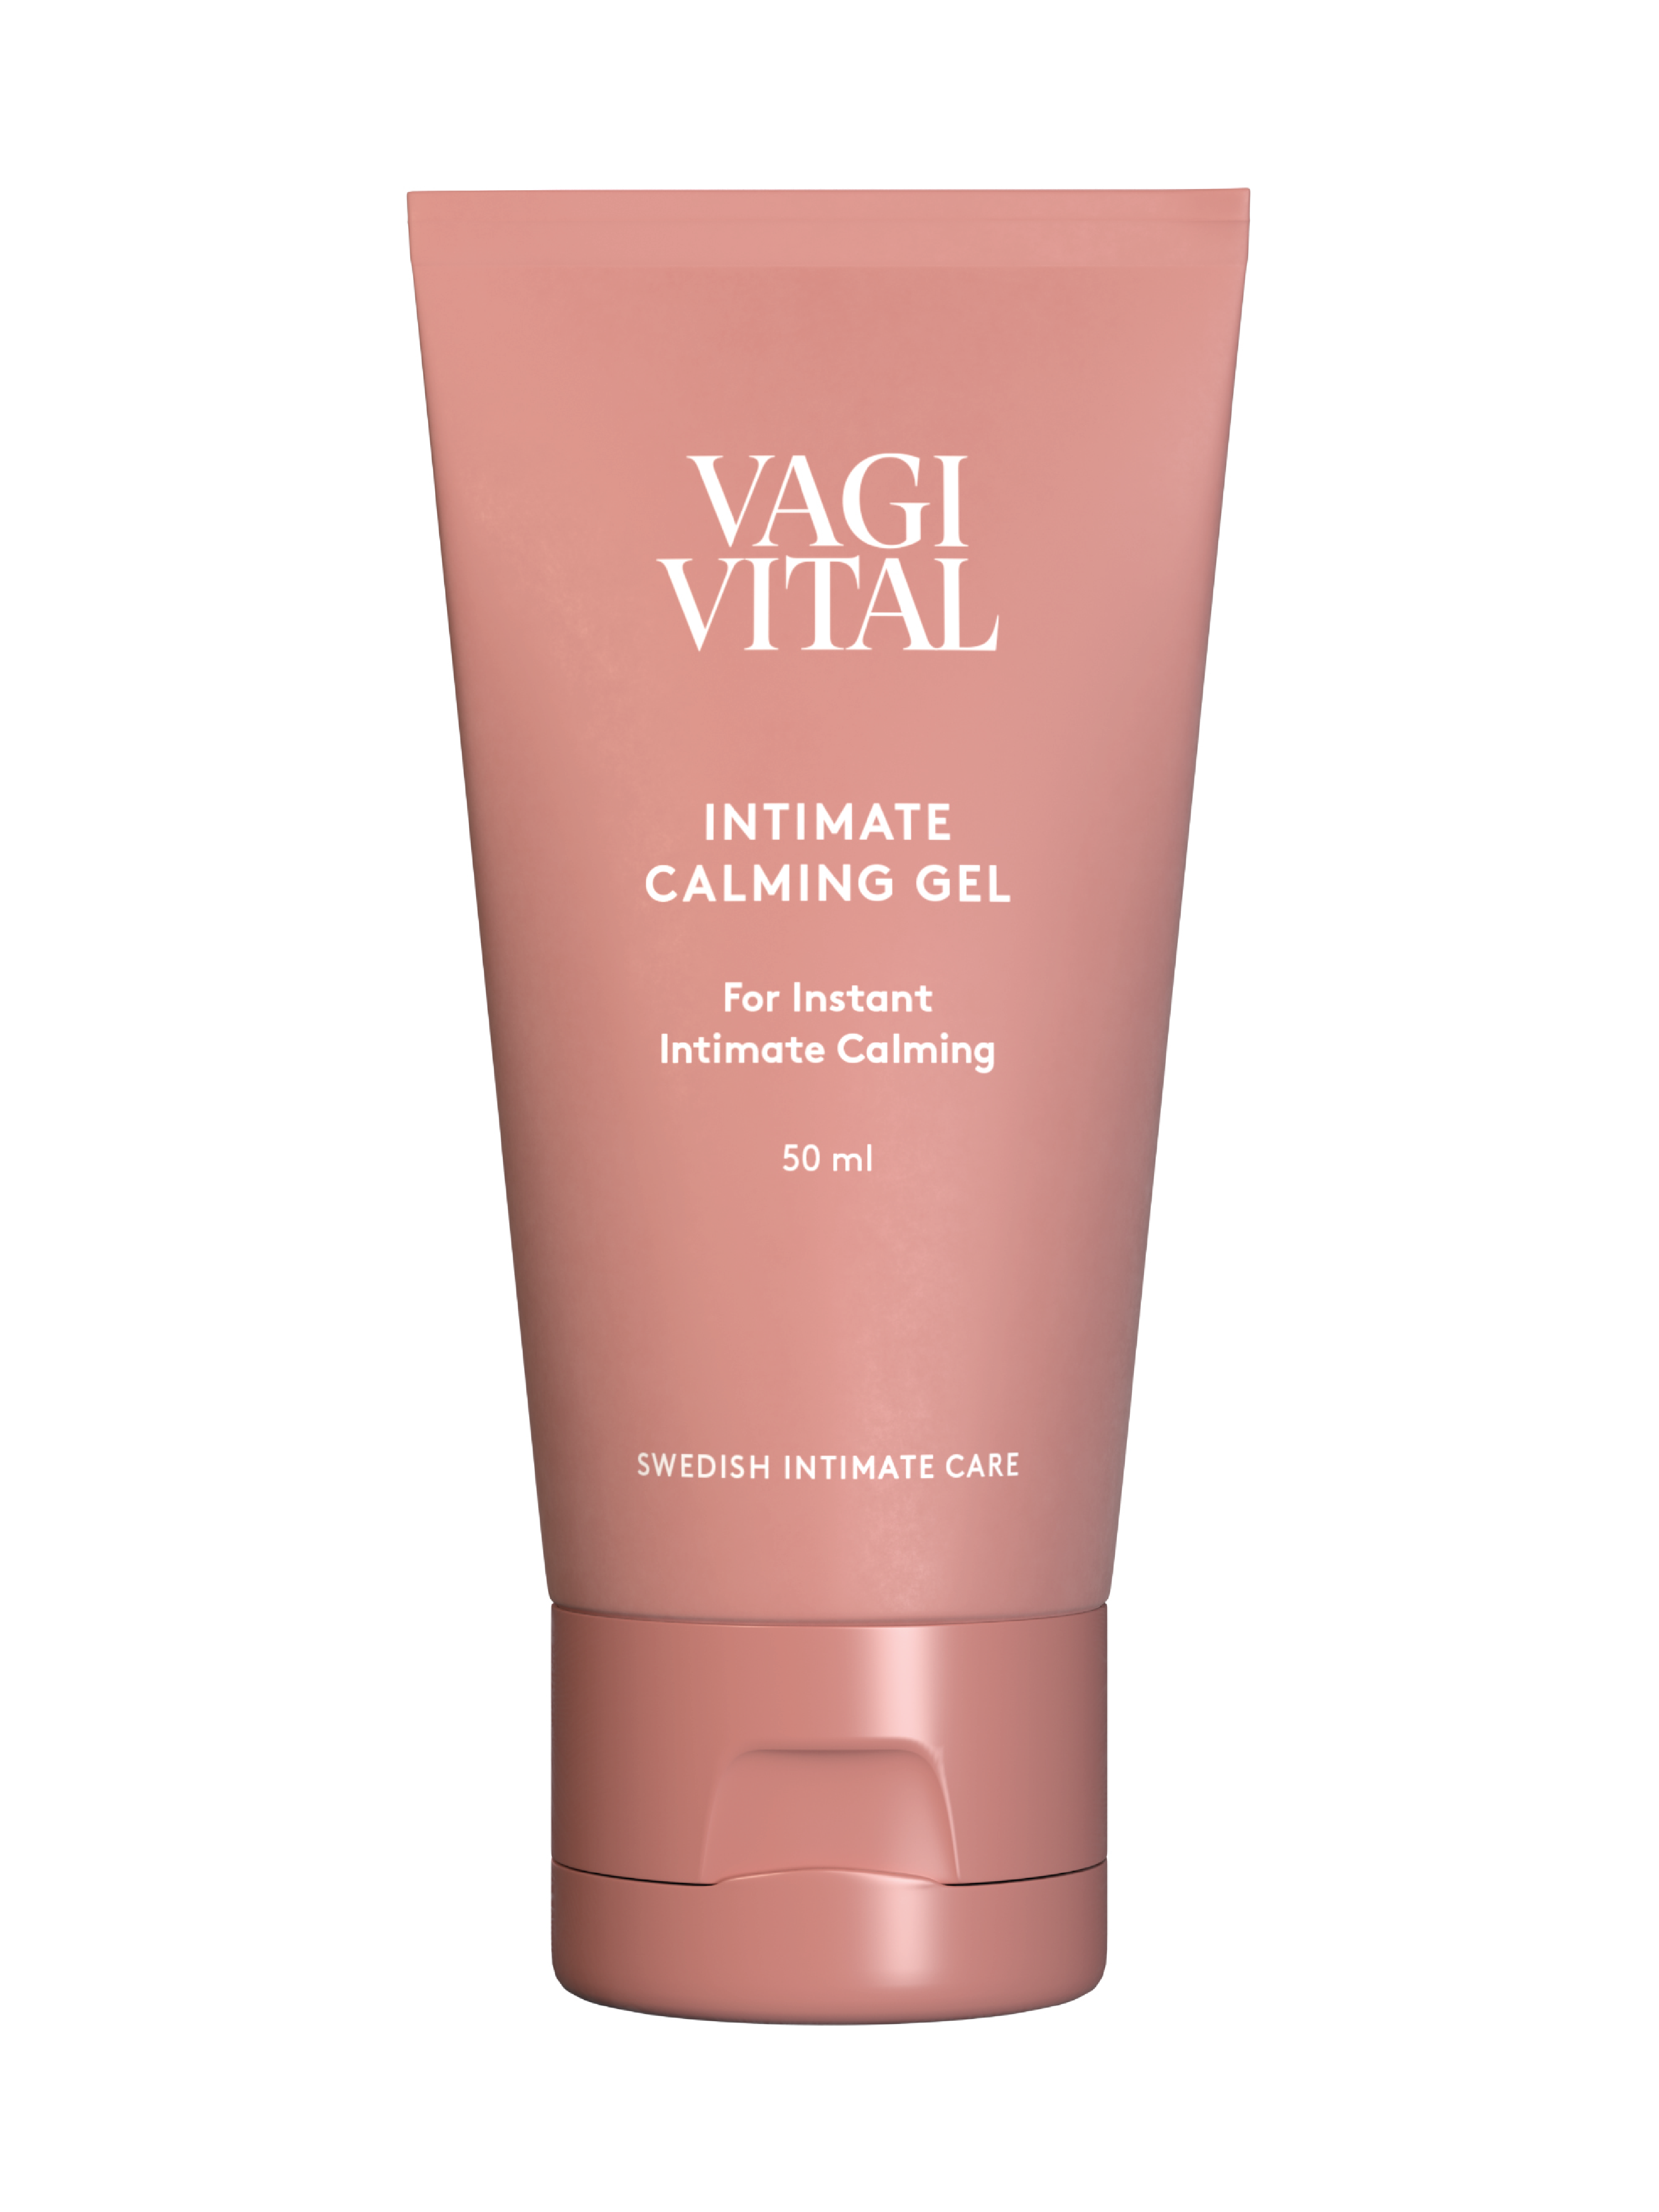 VagiVital Intimate Calming Gel, 50 ml